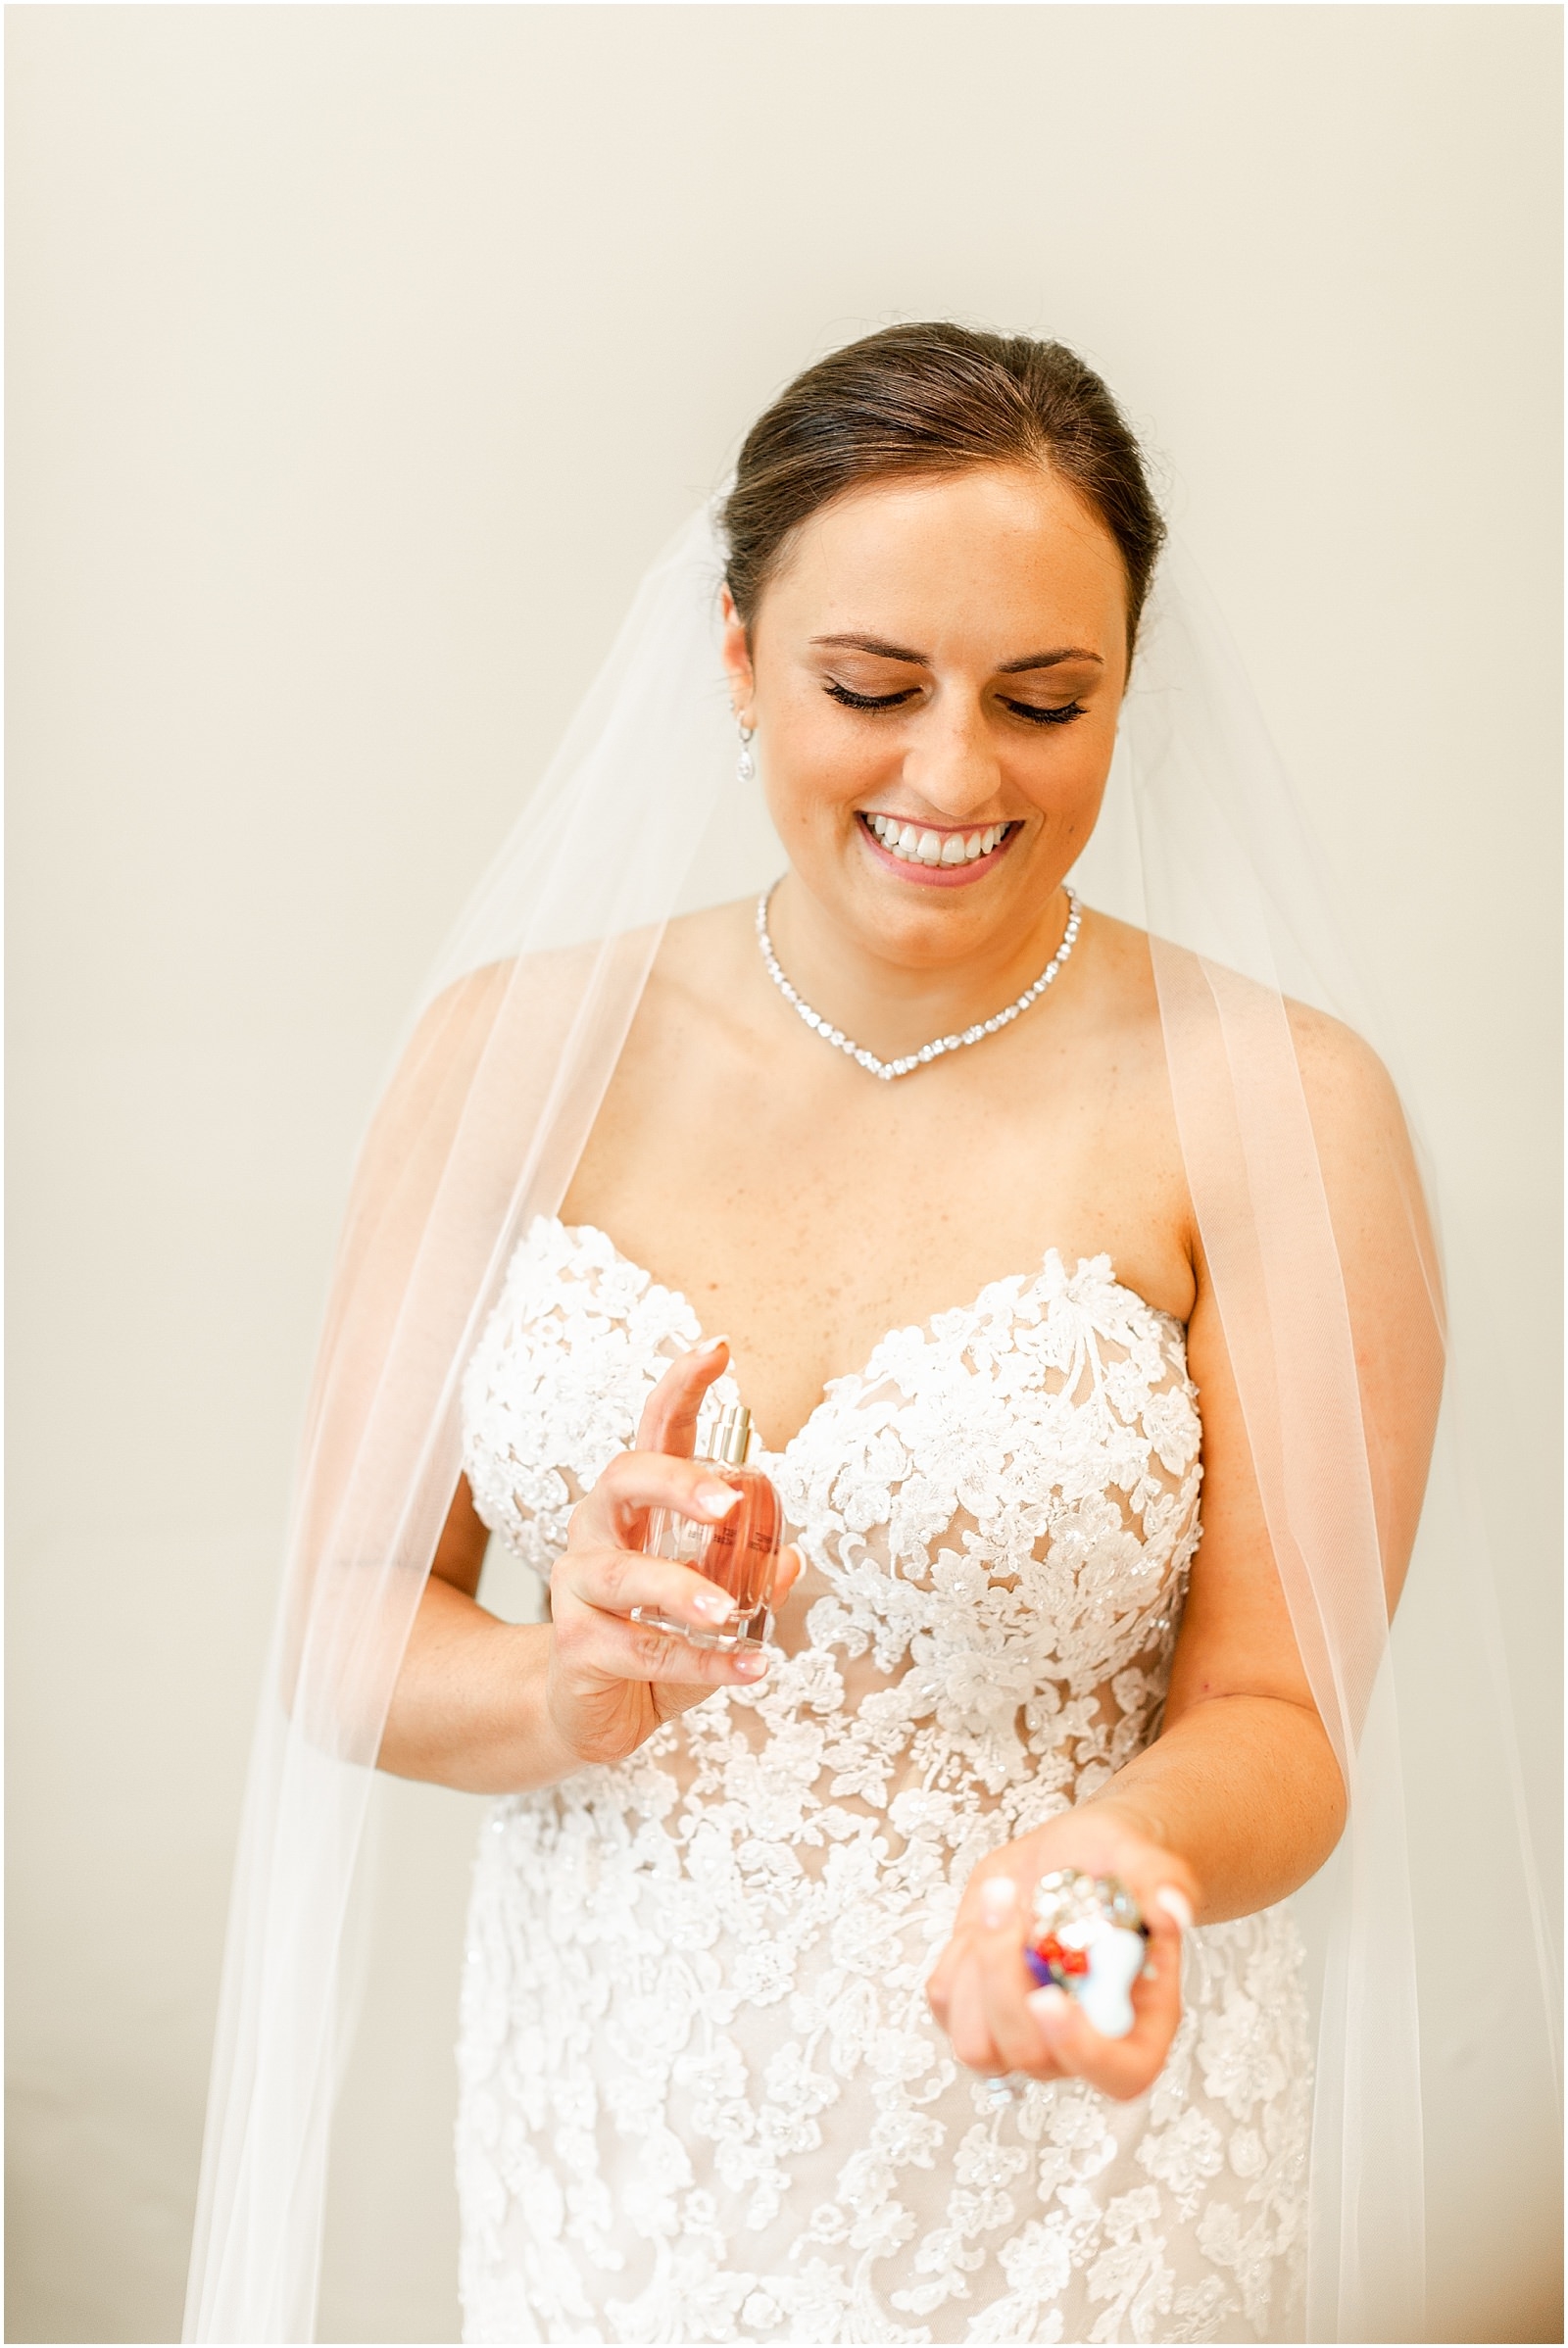 Deidra and Andrew | A Huntingburgh Indiana Wedding Bret and Brandie | Evansville Photographers | @bretandbrandie-0023.jpg